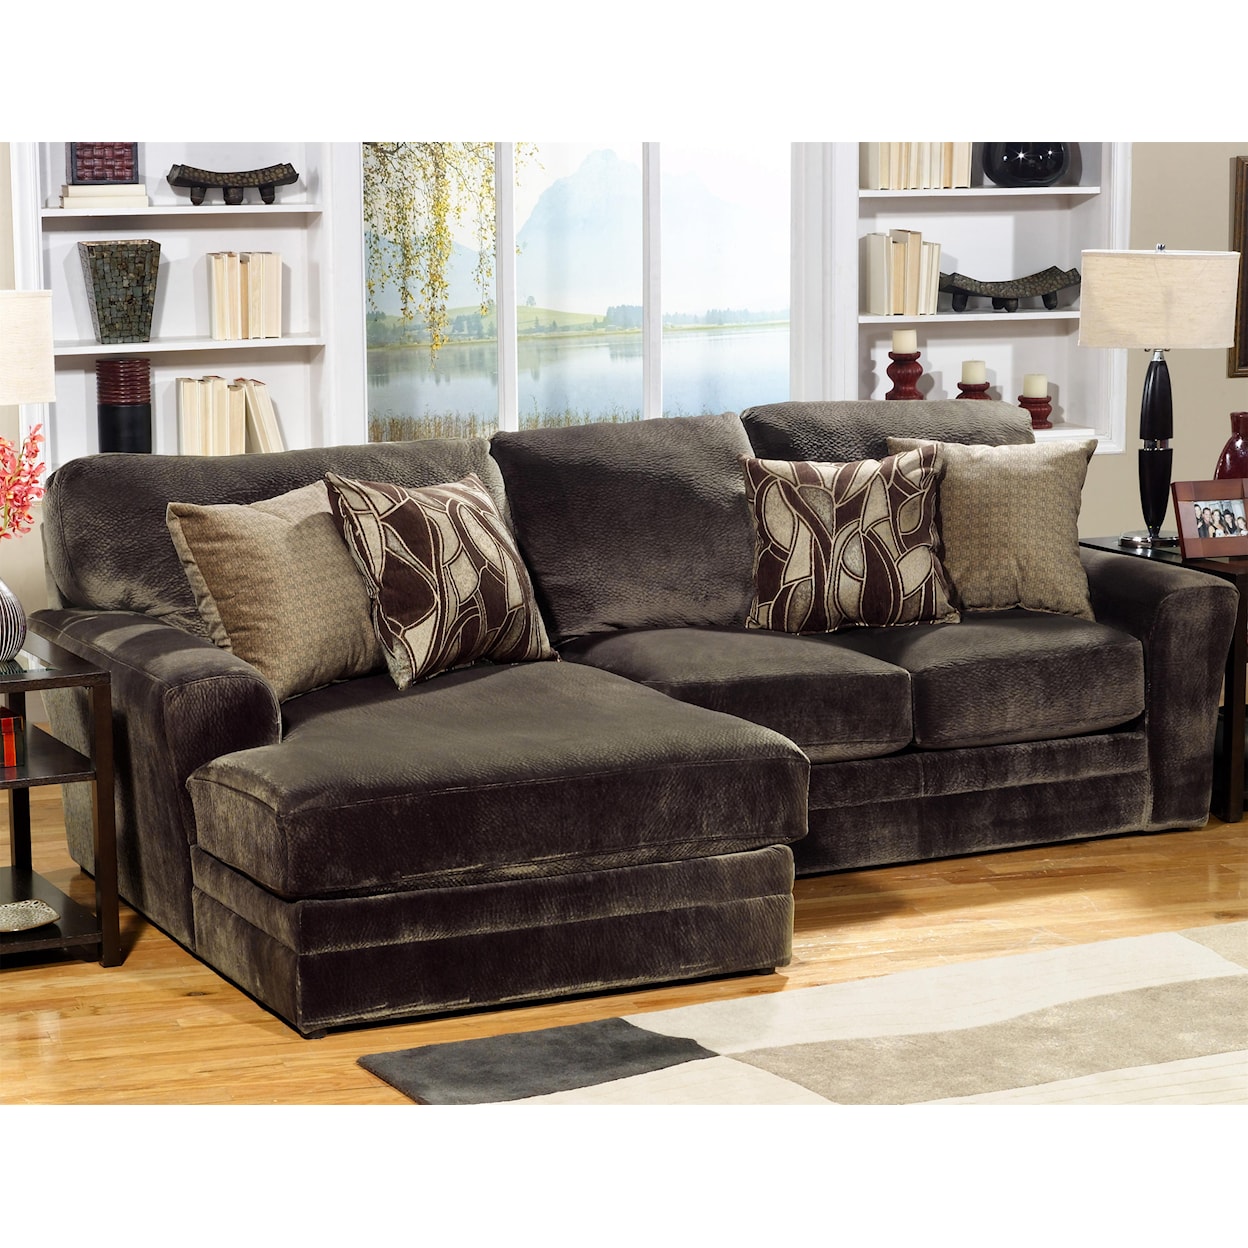 Jackson Furniture 4377 Everest Sectional Sofa